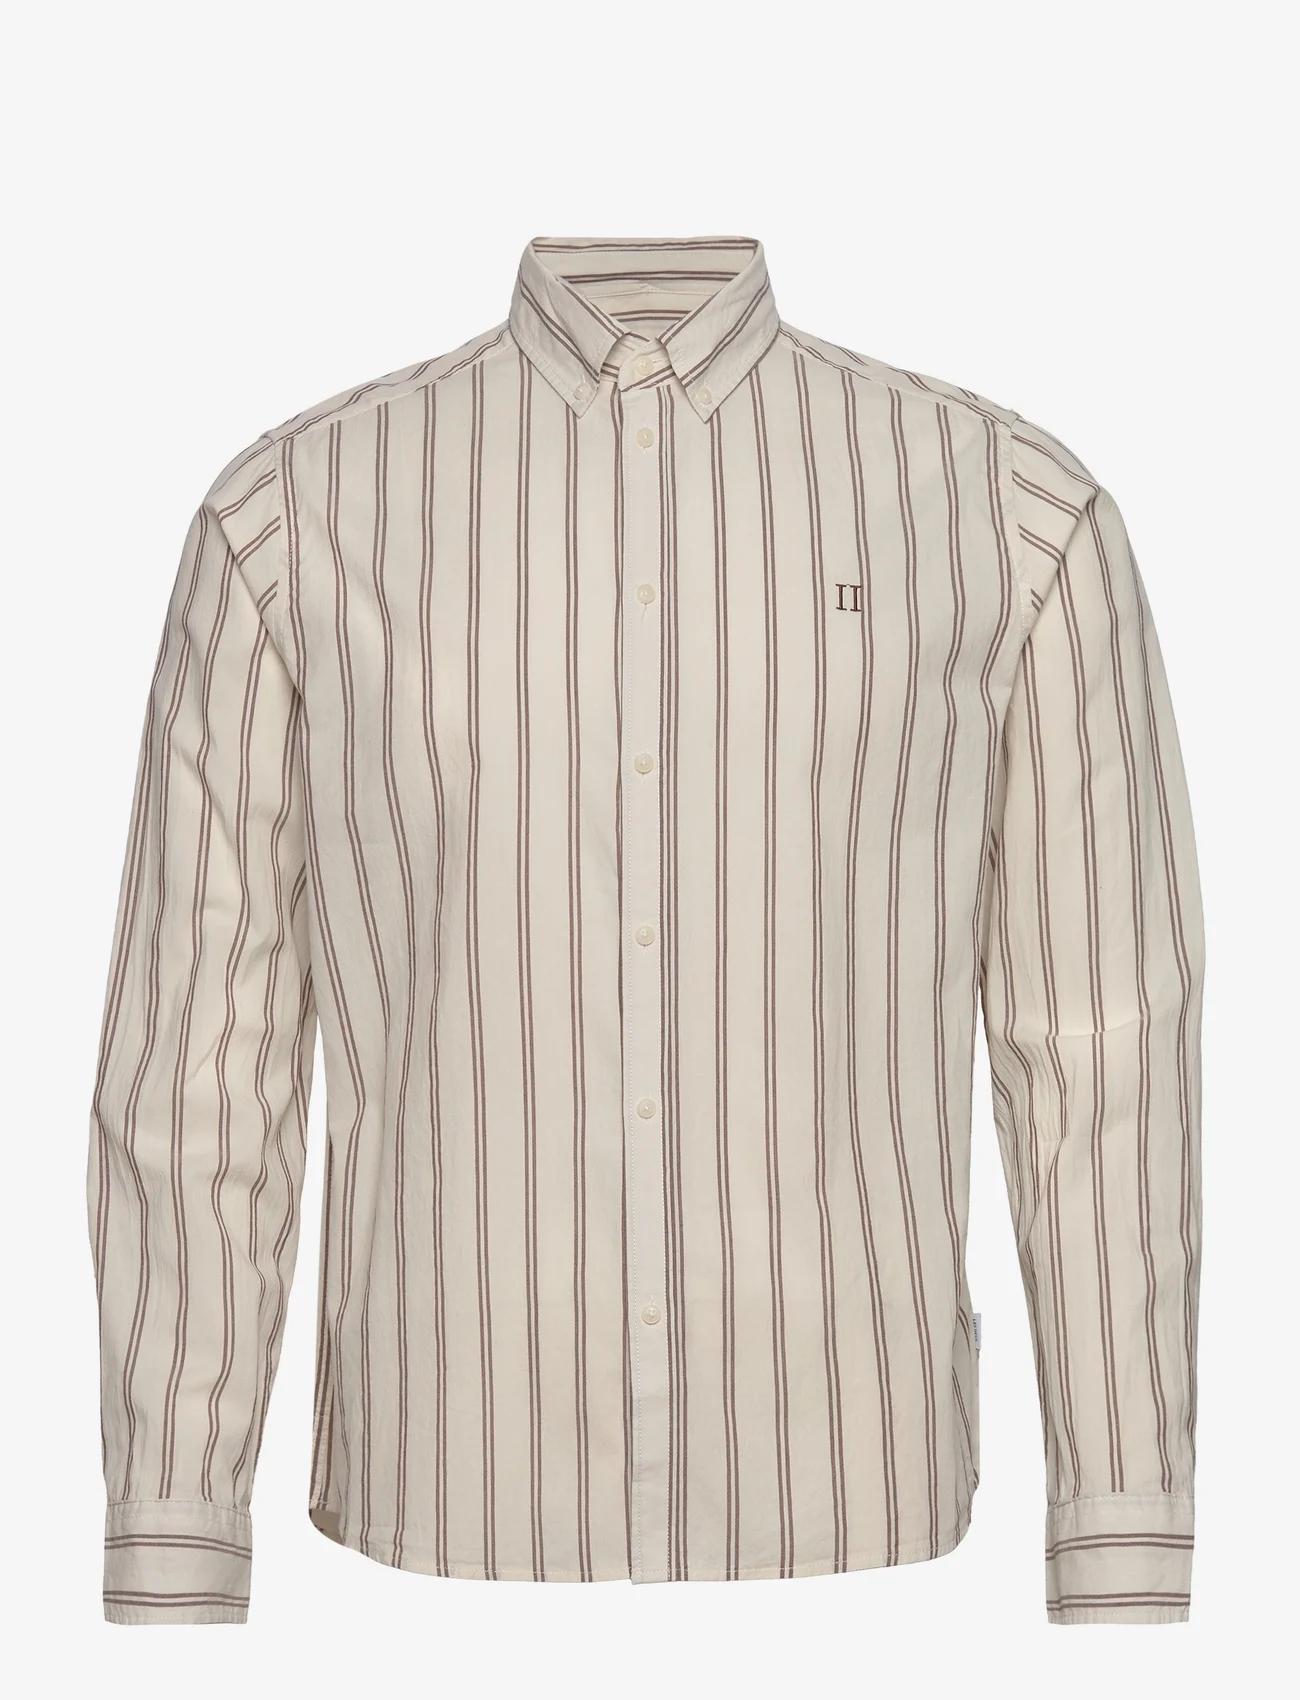 Les Deux - Kristian Stripe Shirt - oxford-skjorter - ivory/warm brown - 0